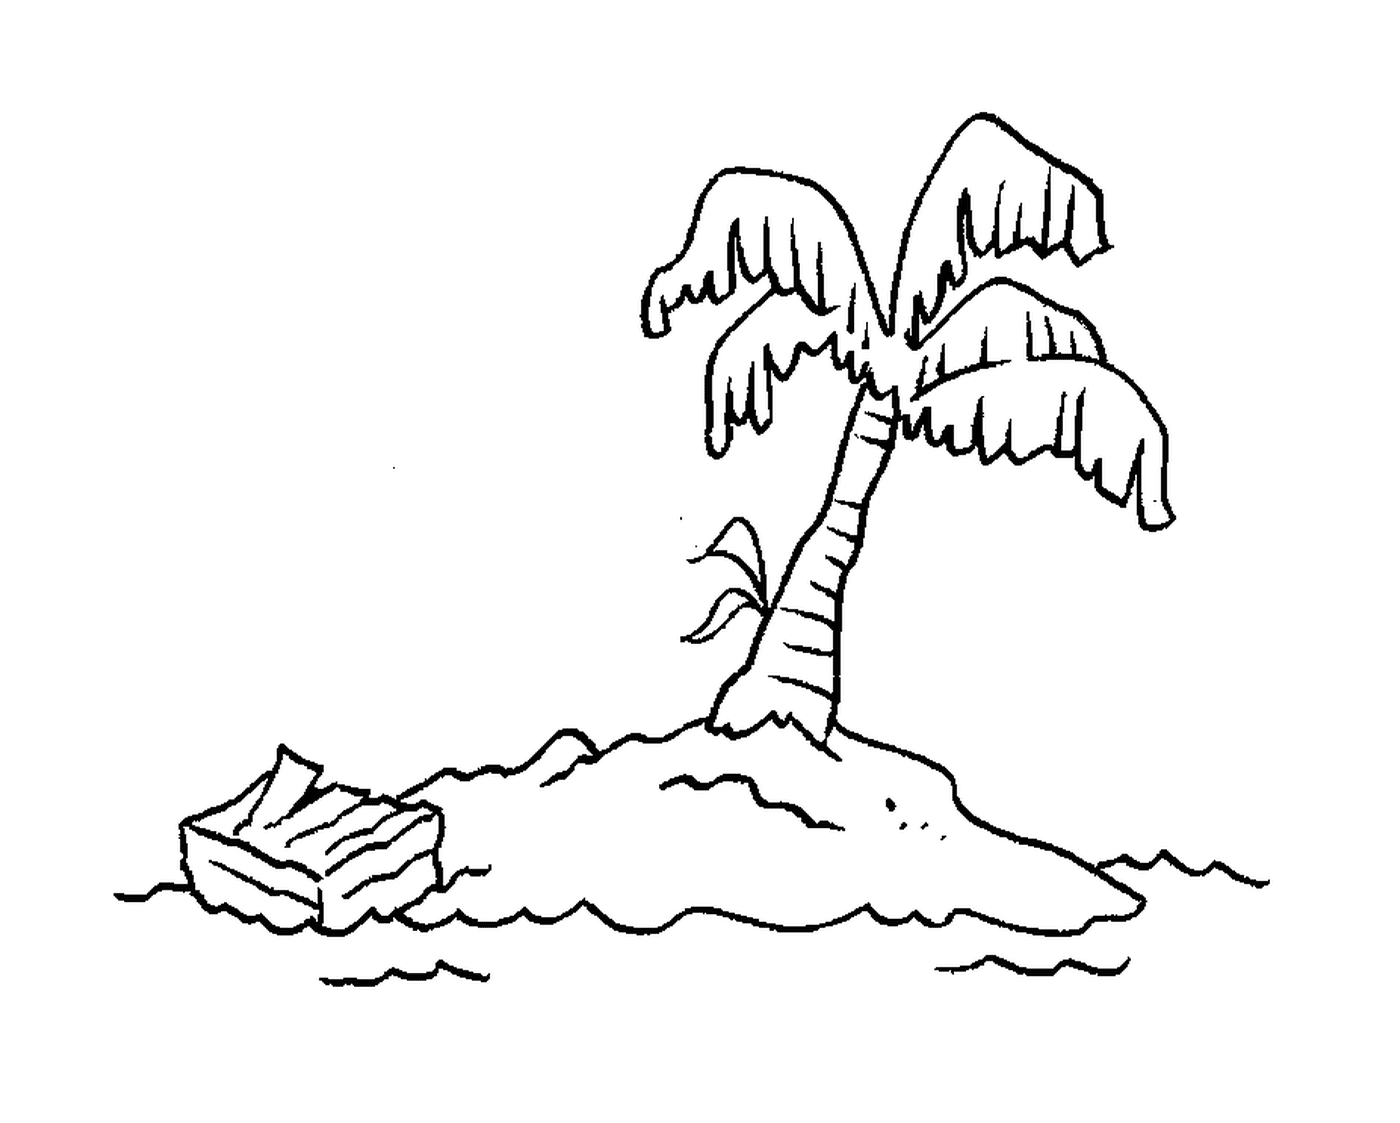  Isla desierta de palmeras 